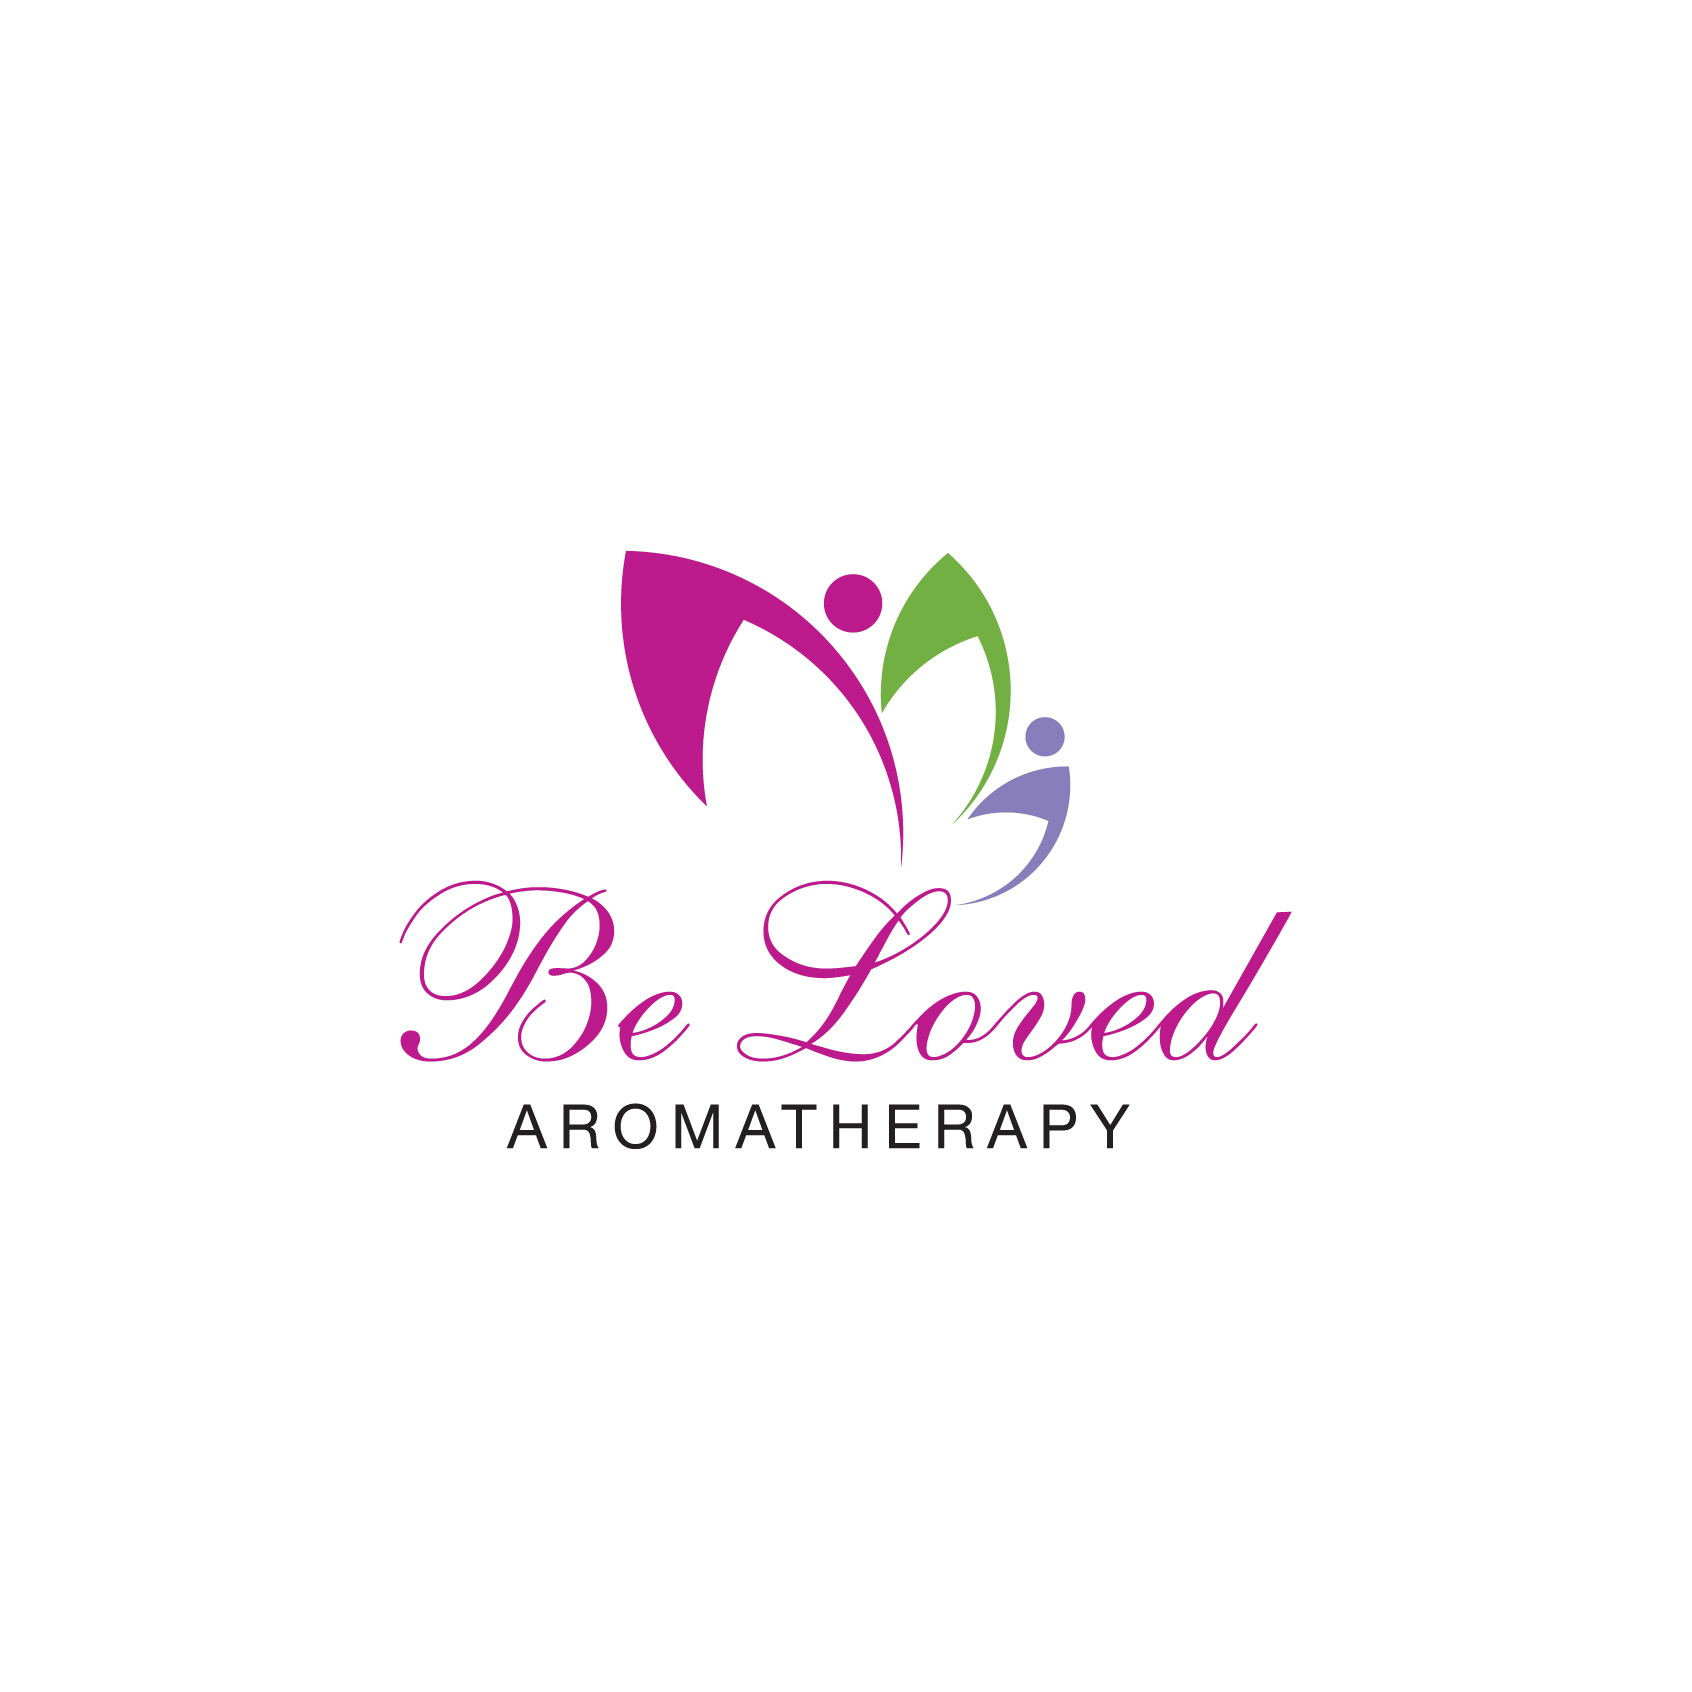 Aromatherapy Logo - Logo Design Contests » Fun Logo Design for Be Loved Aromatherapy ...